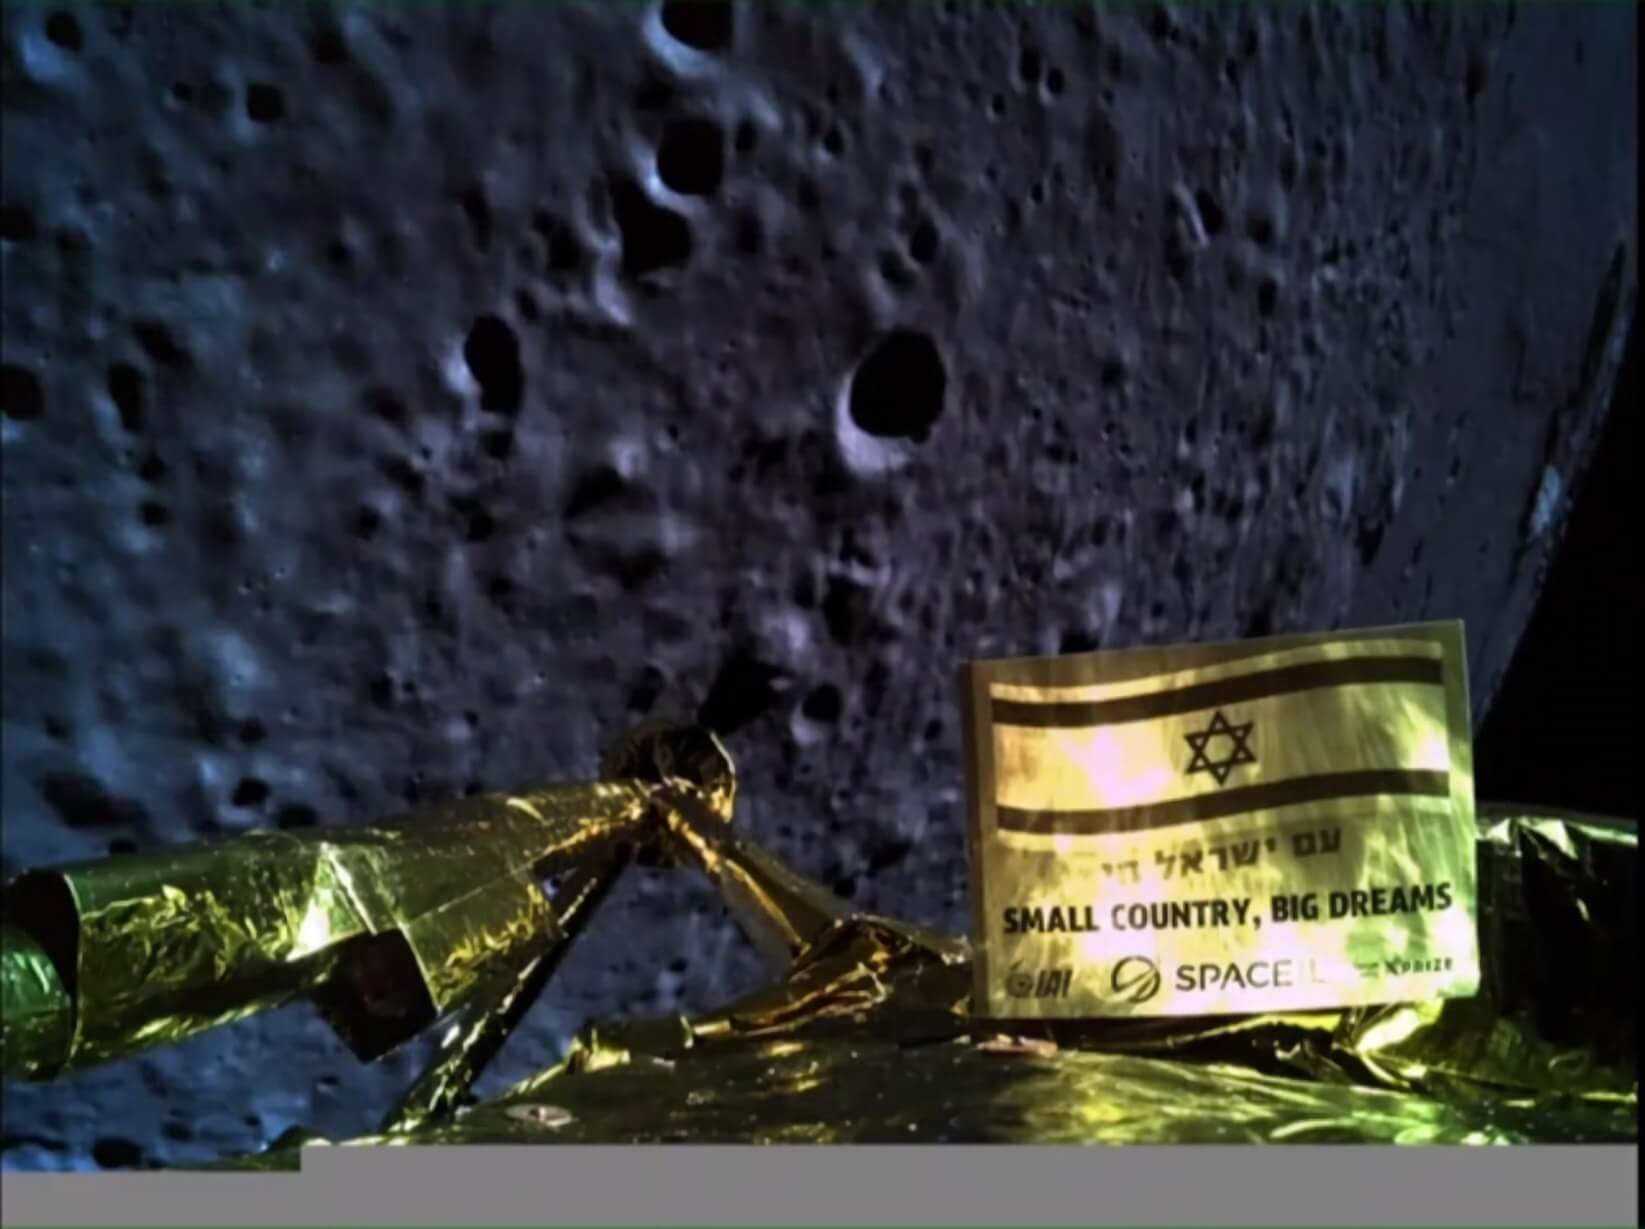 Israel crashed its lunar lander into the Moon's surface